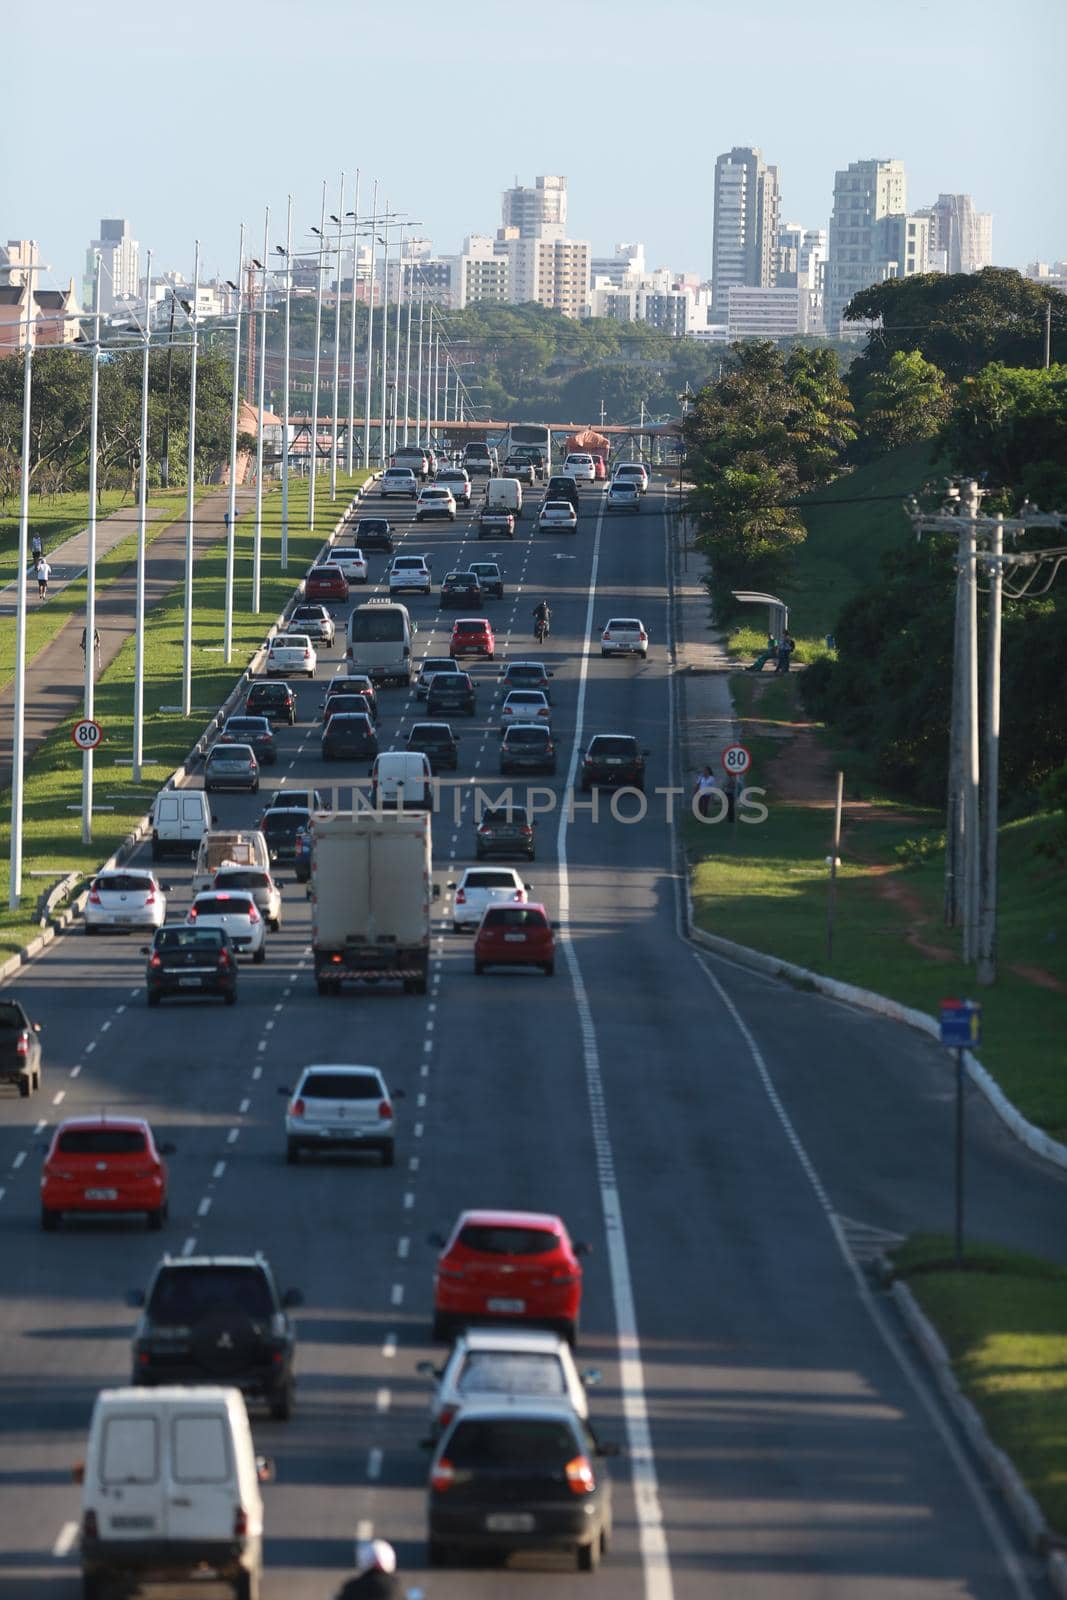 salvador, bahia, brazil - may 27, 2015: view of Avenida Luiz Viana - Paralela - in Salvador, before the construction of line 2 of the city's subway.